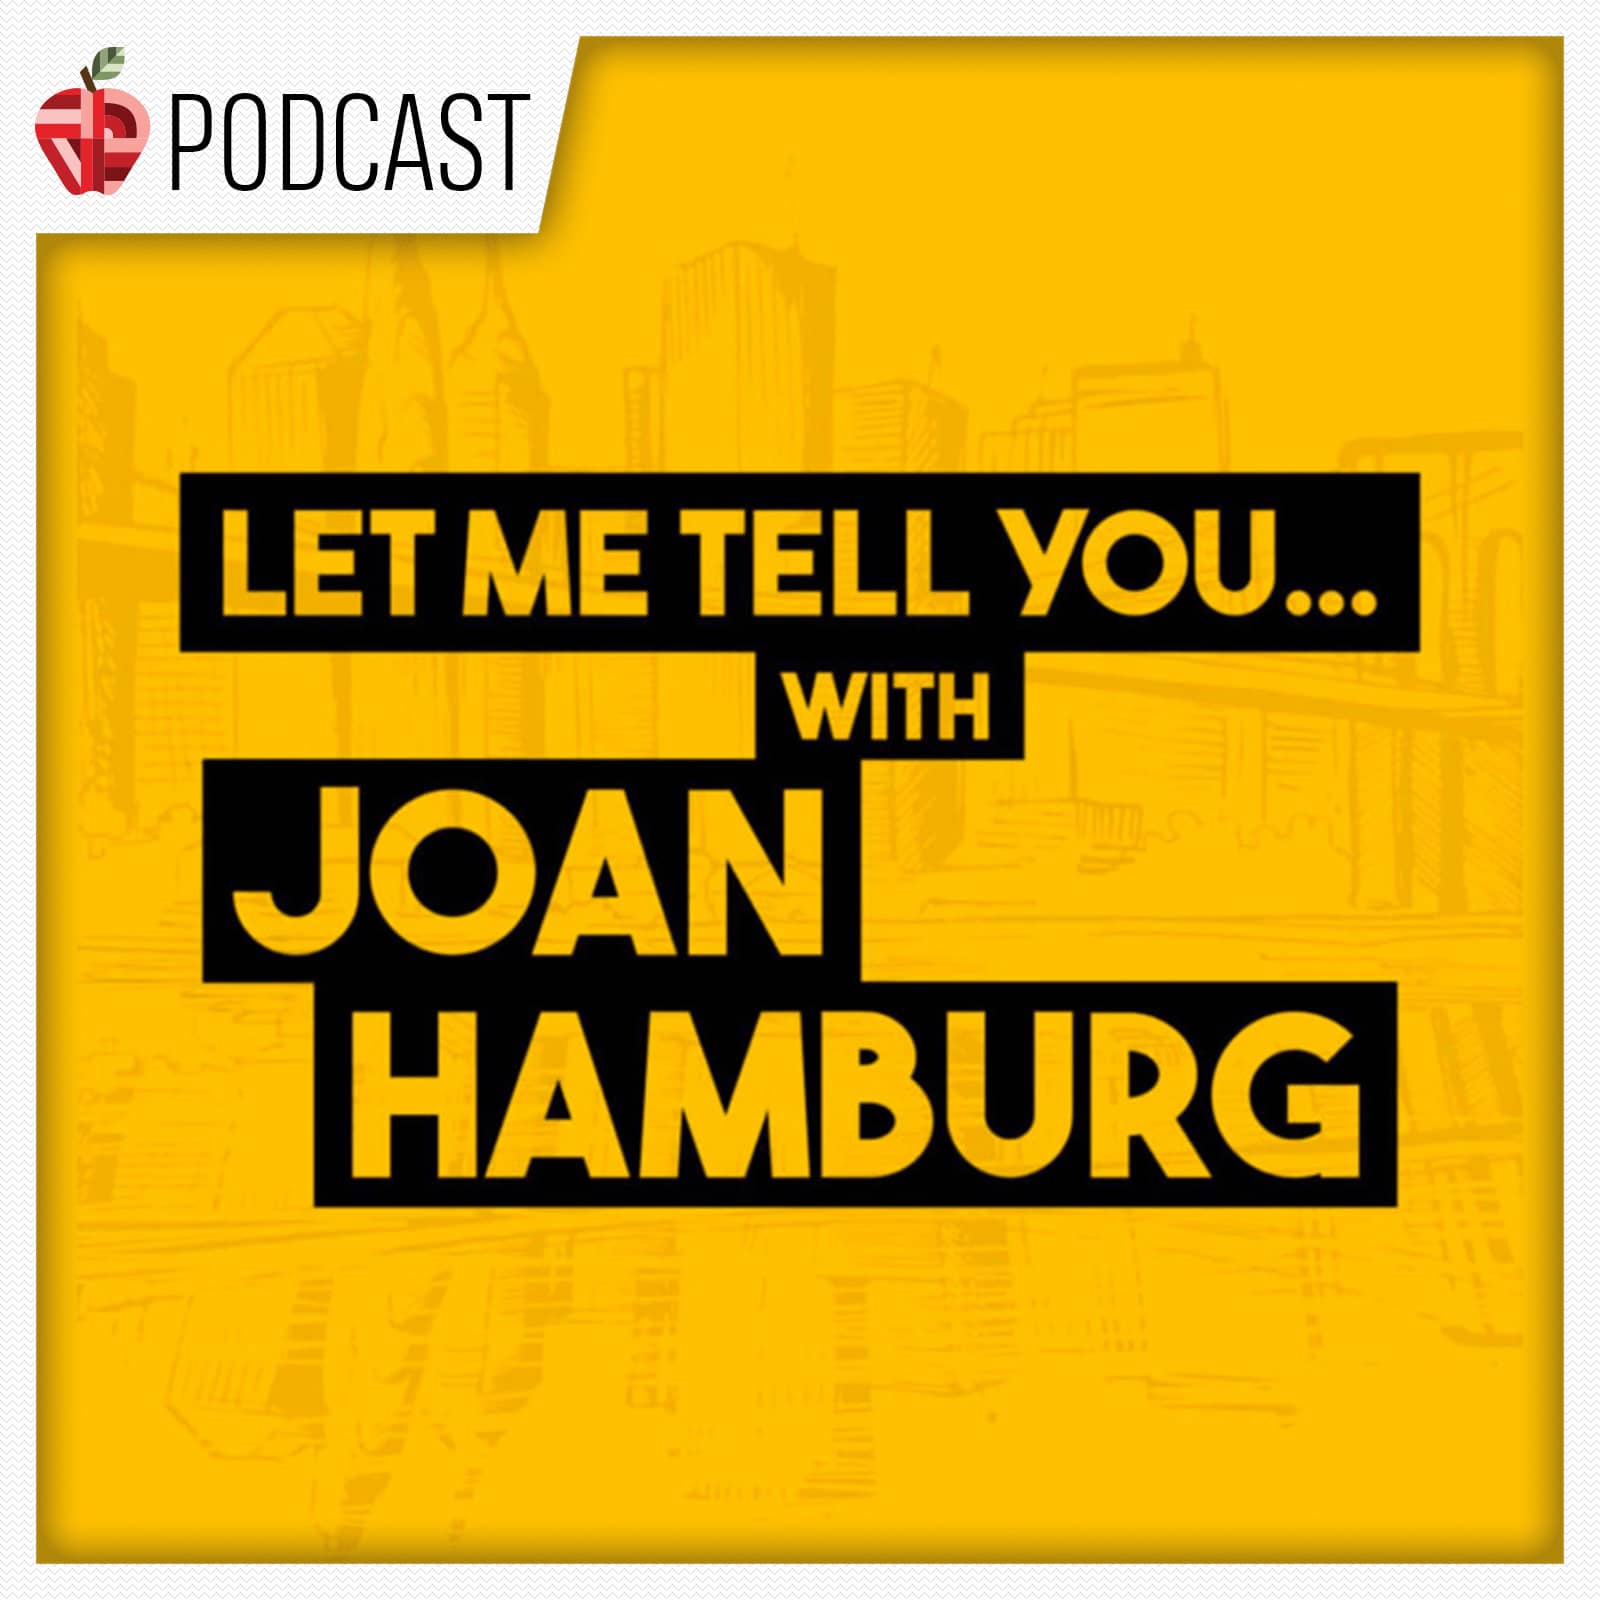 joan-hamburg-let-me-tell-you-podcast-podcast-logo-11